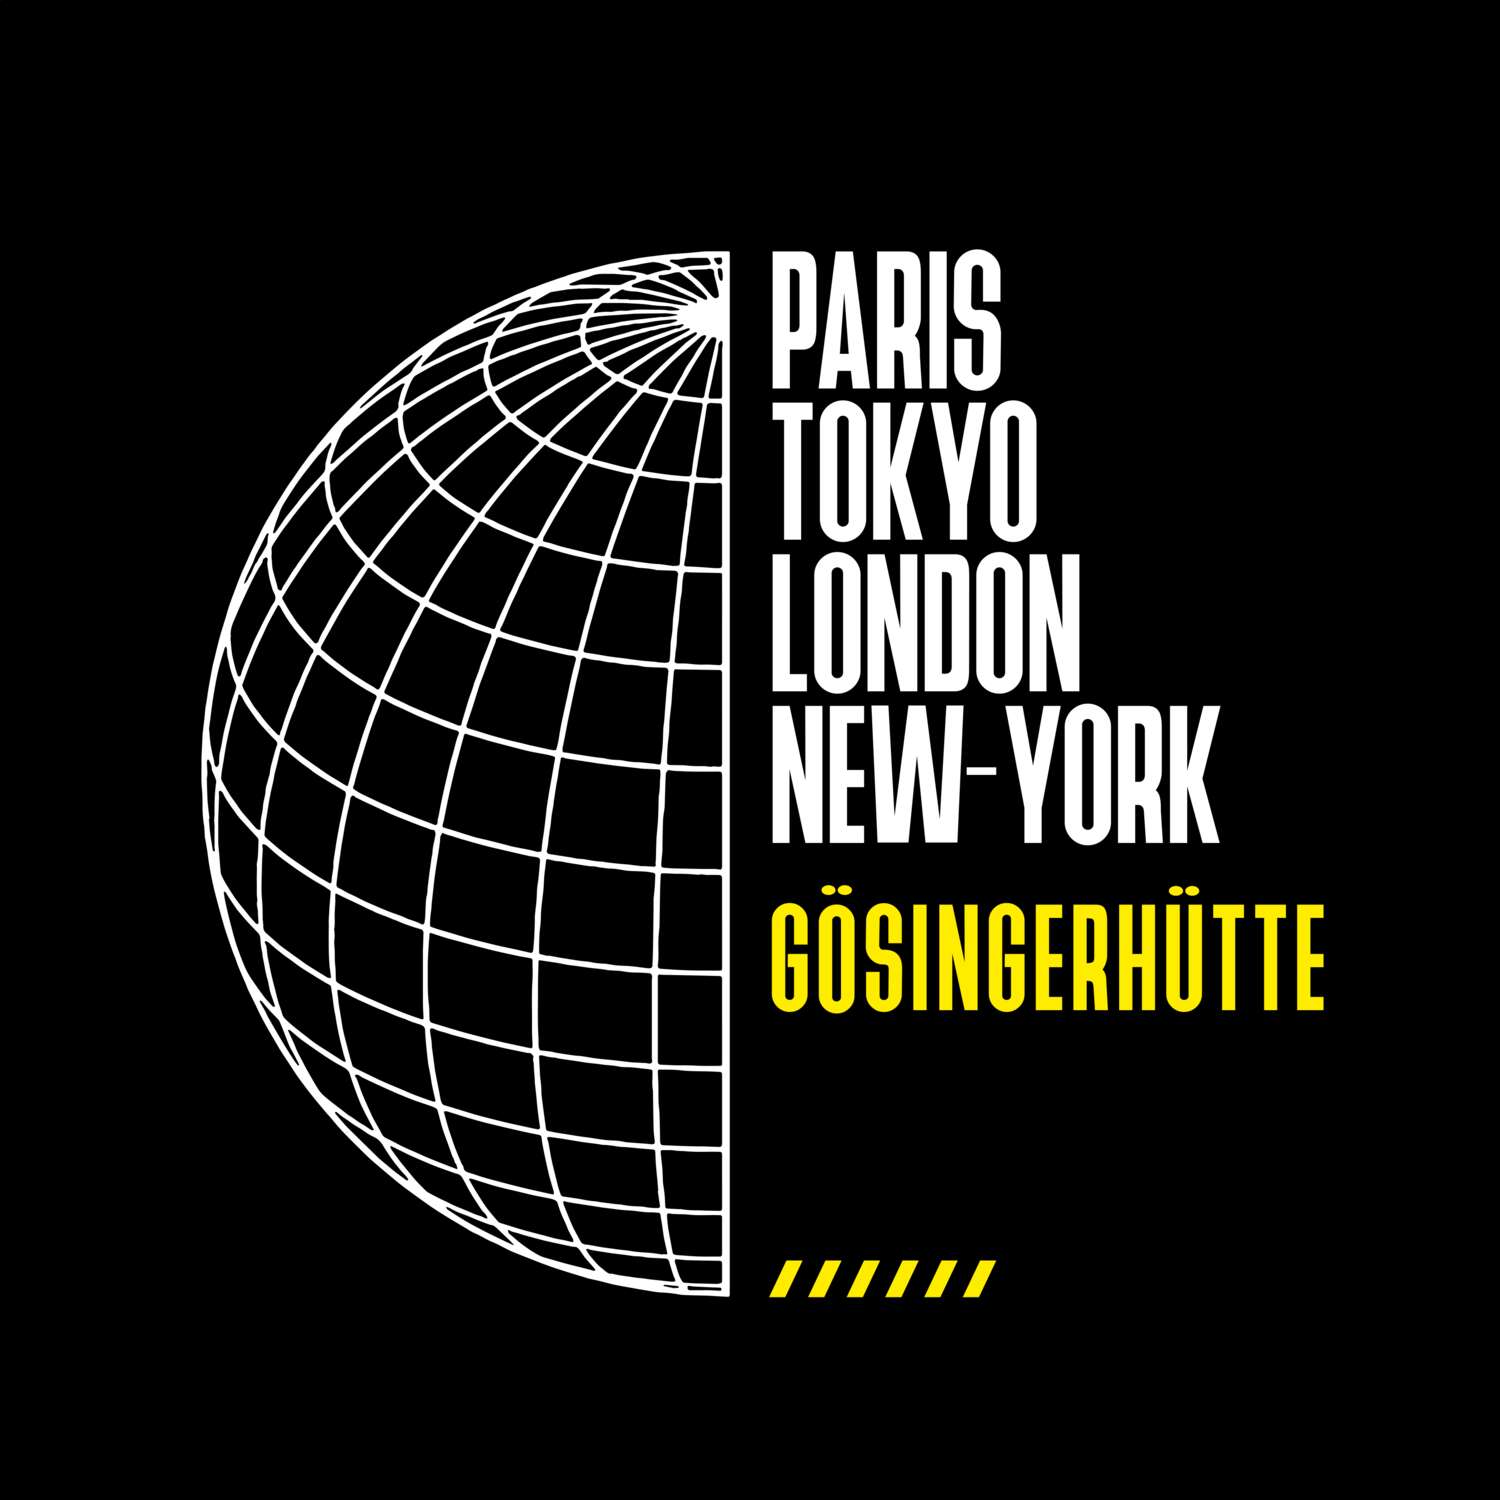 Gösingerhütte T-Shirt »Paris Tokyo London«